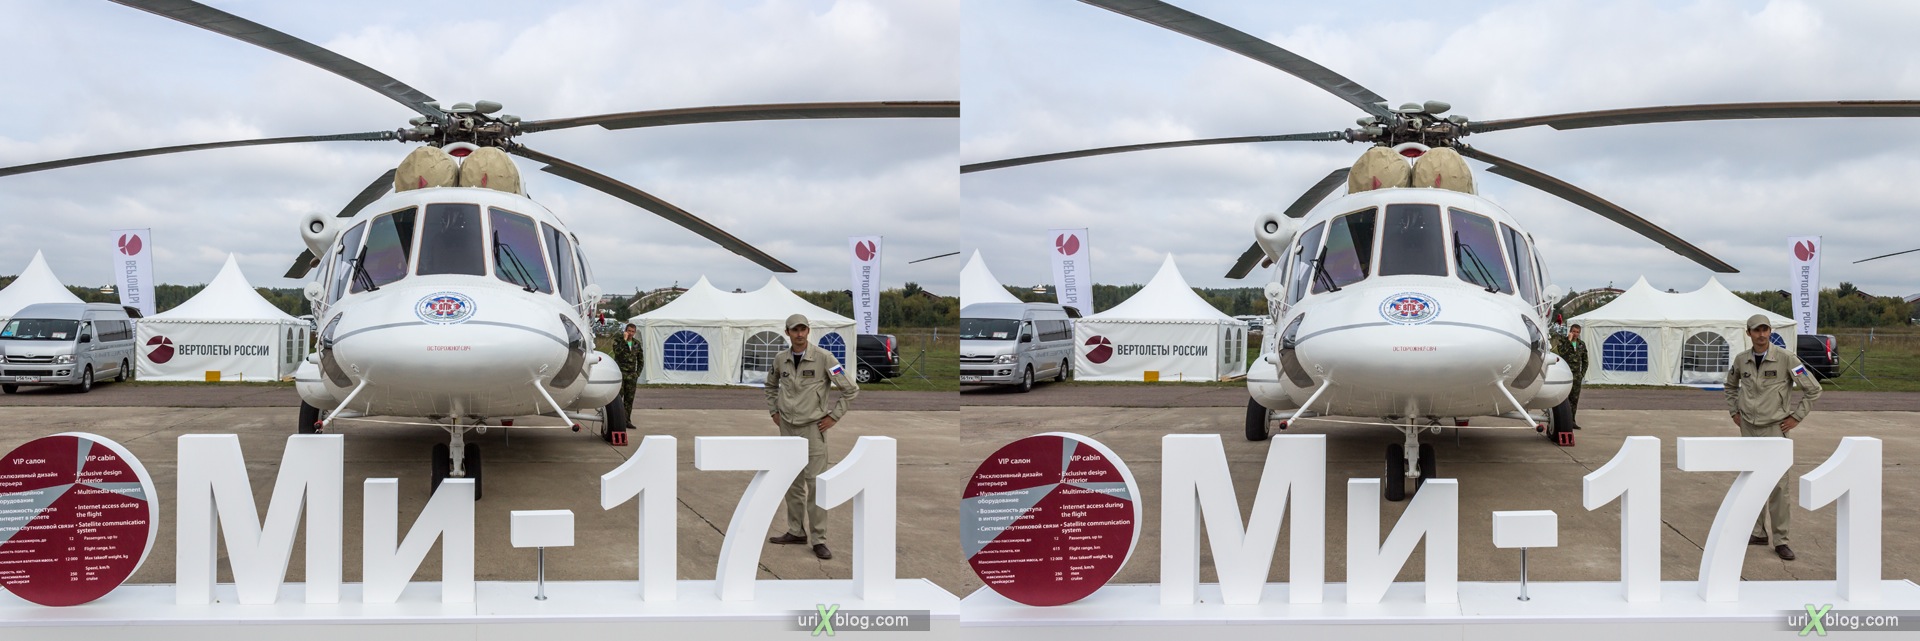 2013, MAKS, International Aviation and Space Salon, Russia, Ramenskoye airfield, Mi-171, helicopter, 3D, stereo pair, cross-eyed, crossview, cross view stereo pair, stereoscopic